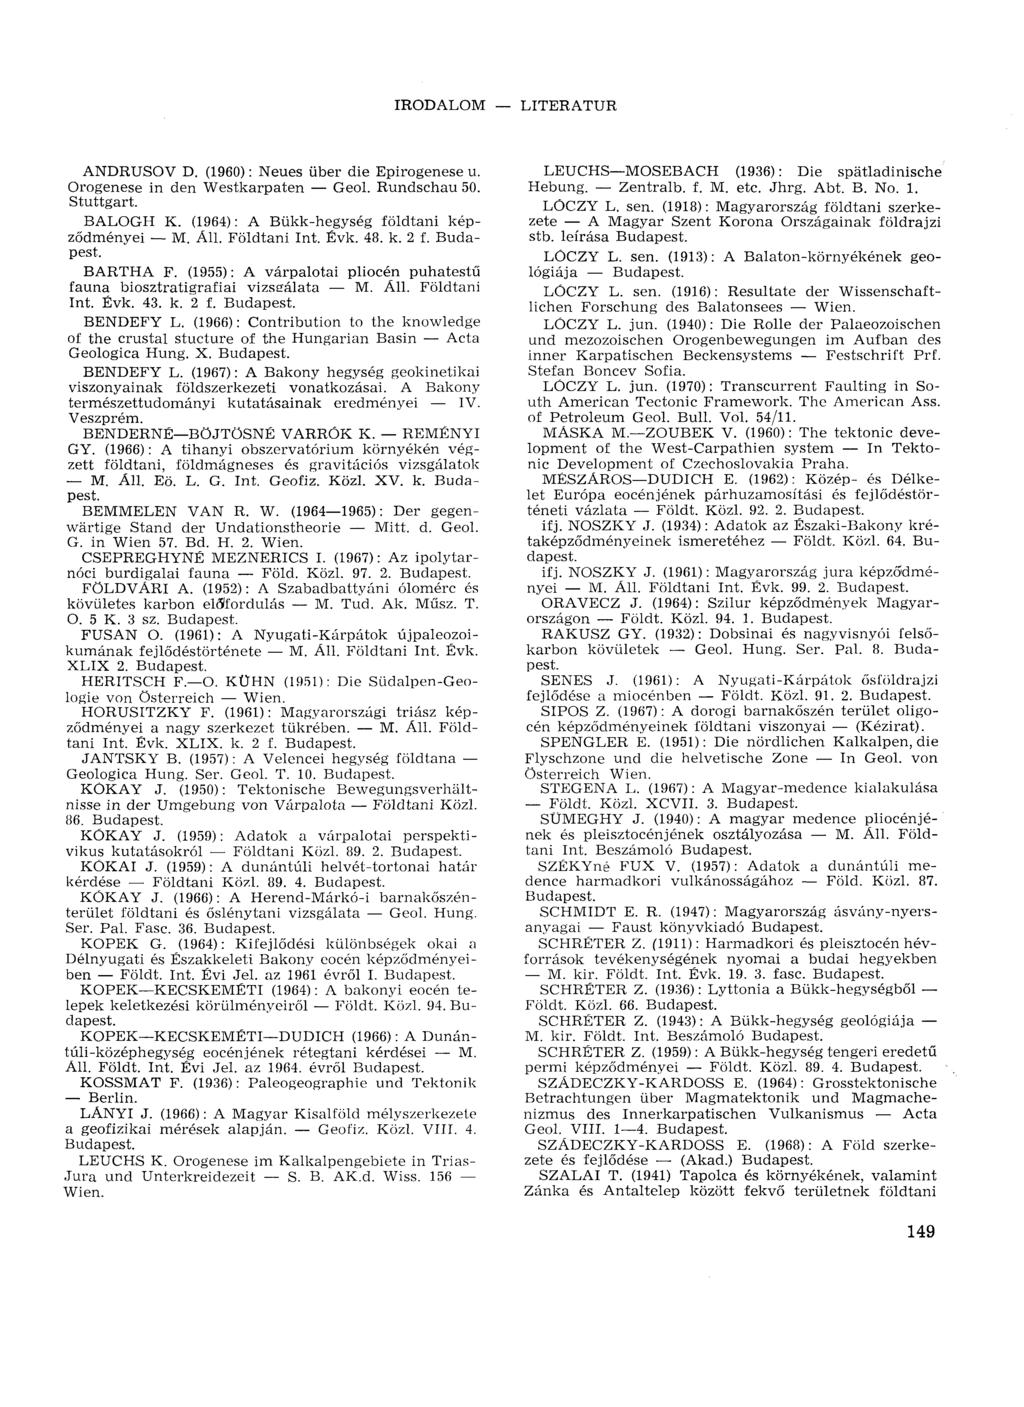 IRODALOM LITERATUR ANDRUSOV D. (1960) : Neues über die Epirogenese u. Orogenèse in den Westkarpaten Geol. Rundschau 50. Stuttgart. BALOGH K. (1964): A Bükk-hegység földtani képződményei M. Áll.